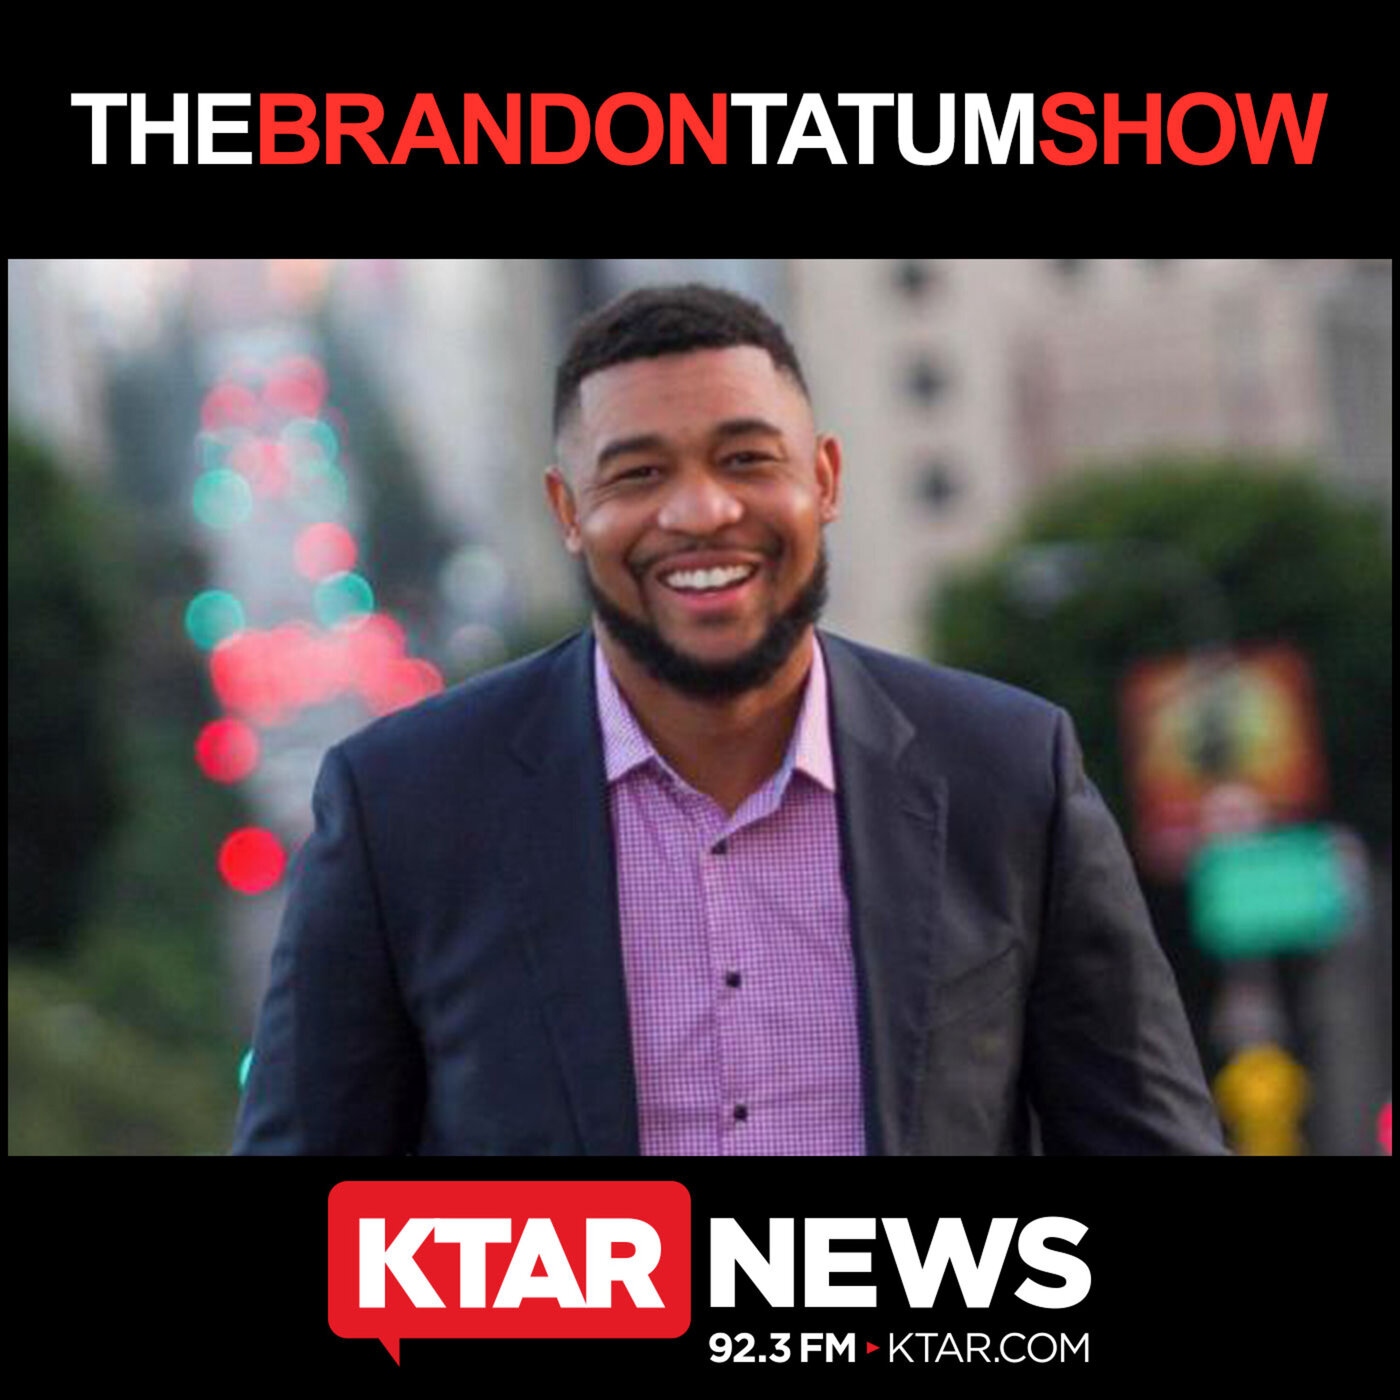 January 25, 2020 - The Brandon Tatum Show